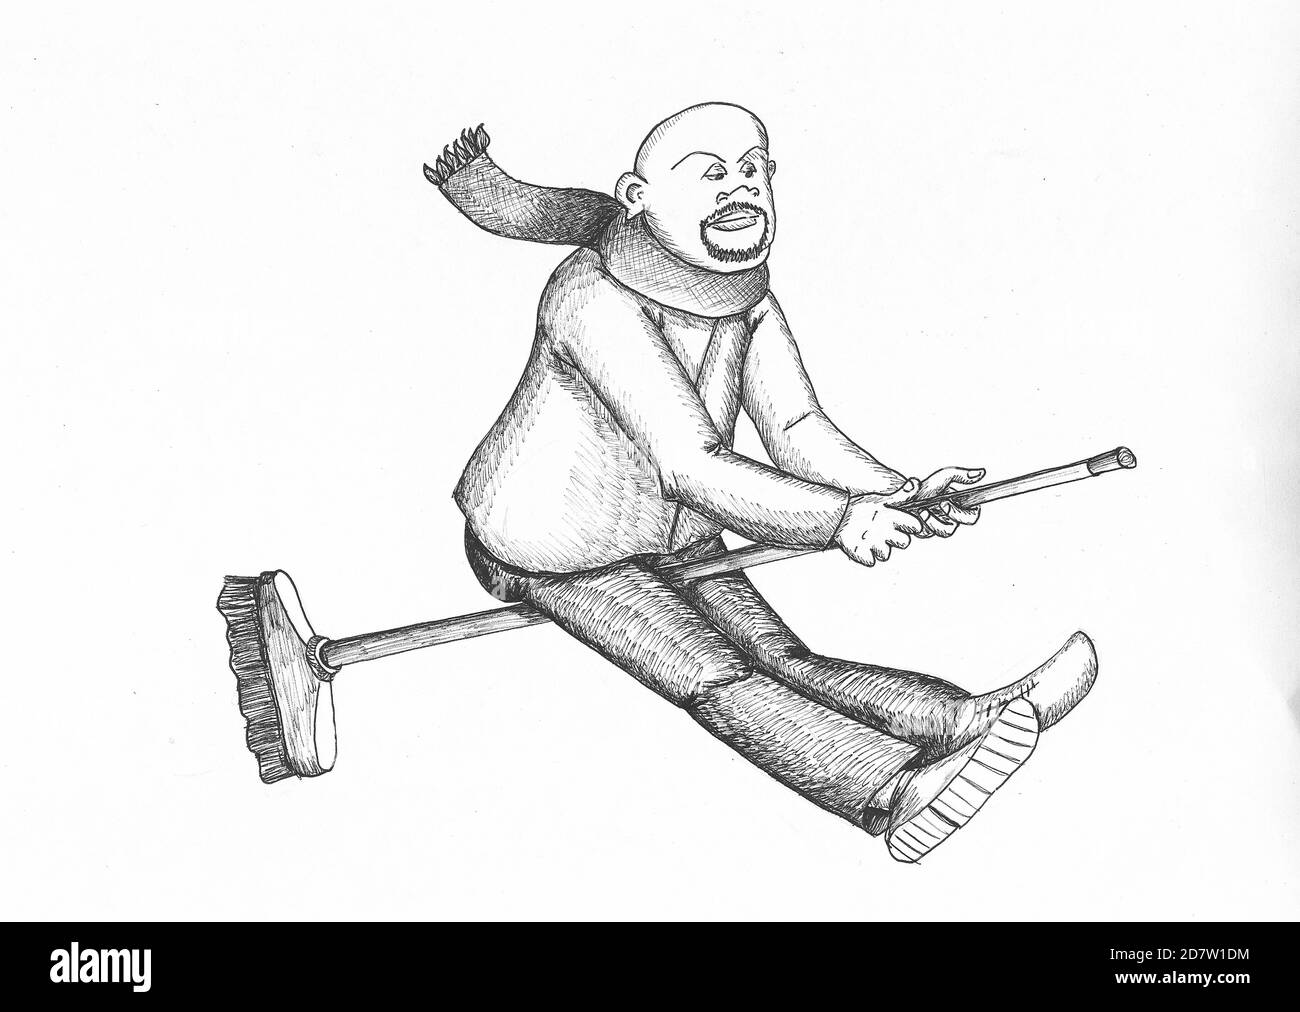 Wizard riding a broom. Illustration. Stock Photo